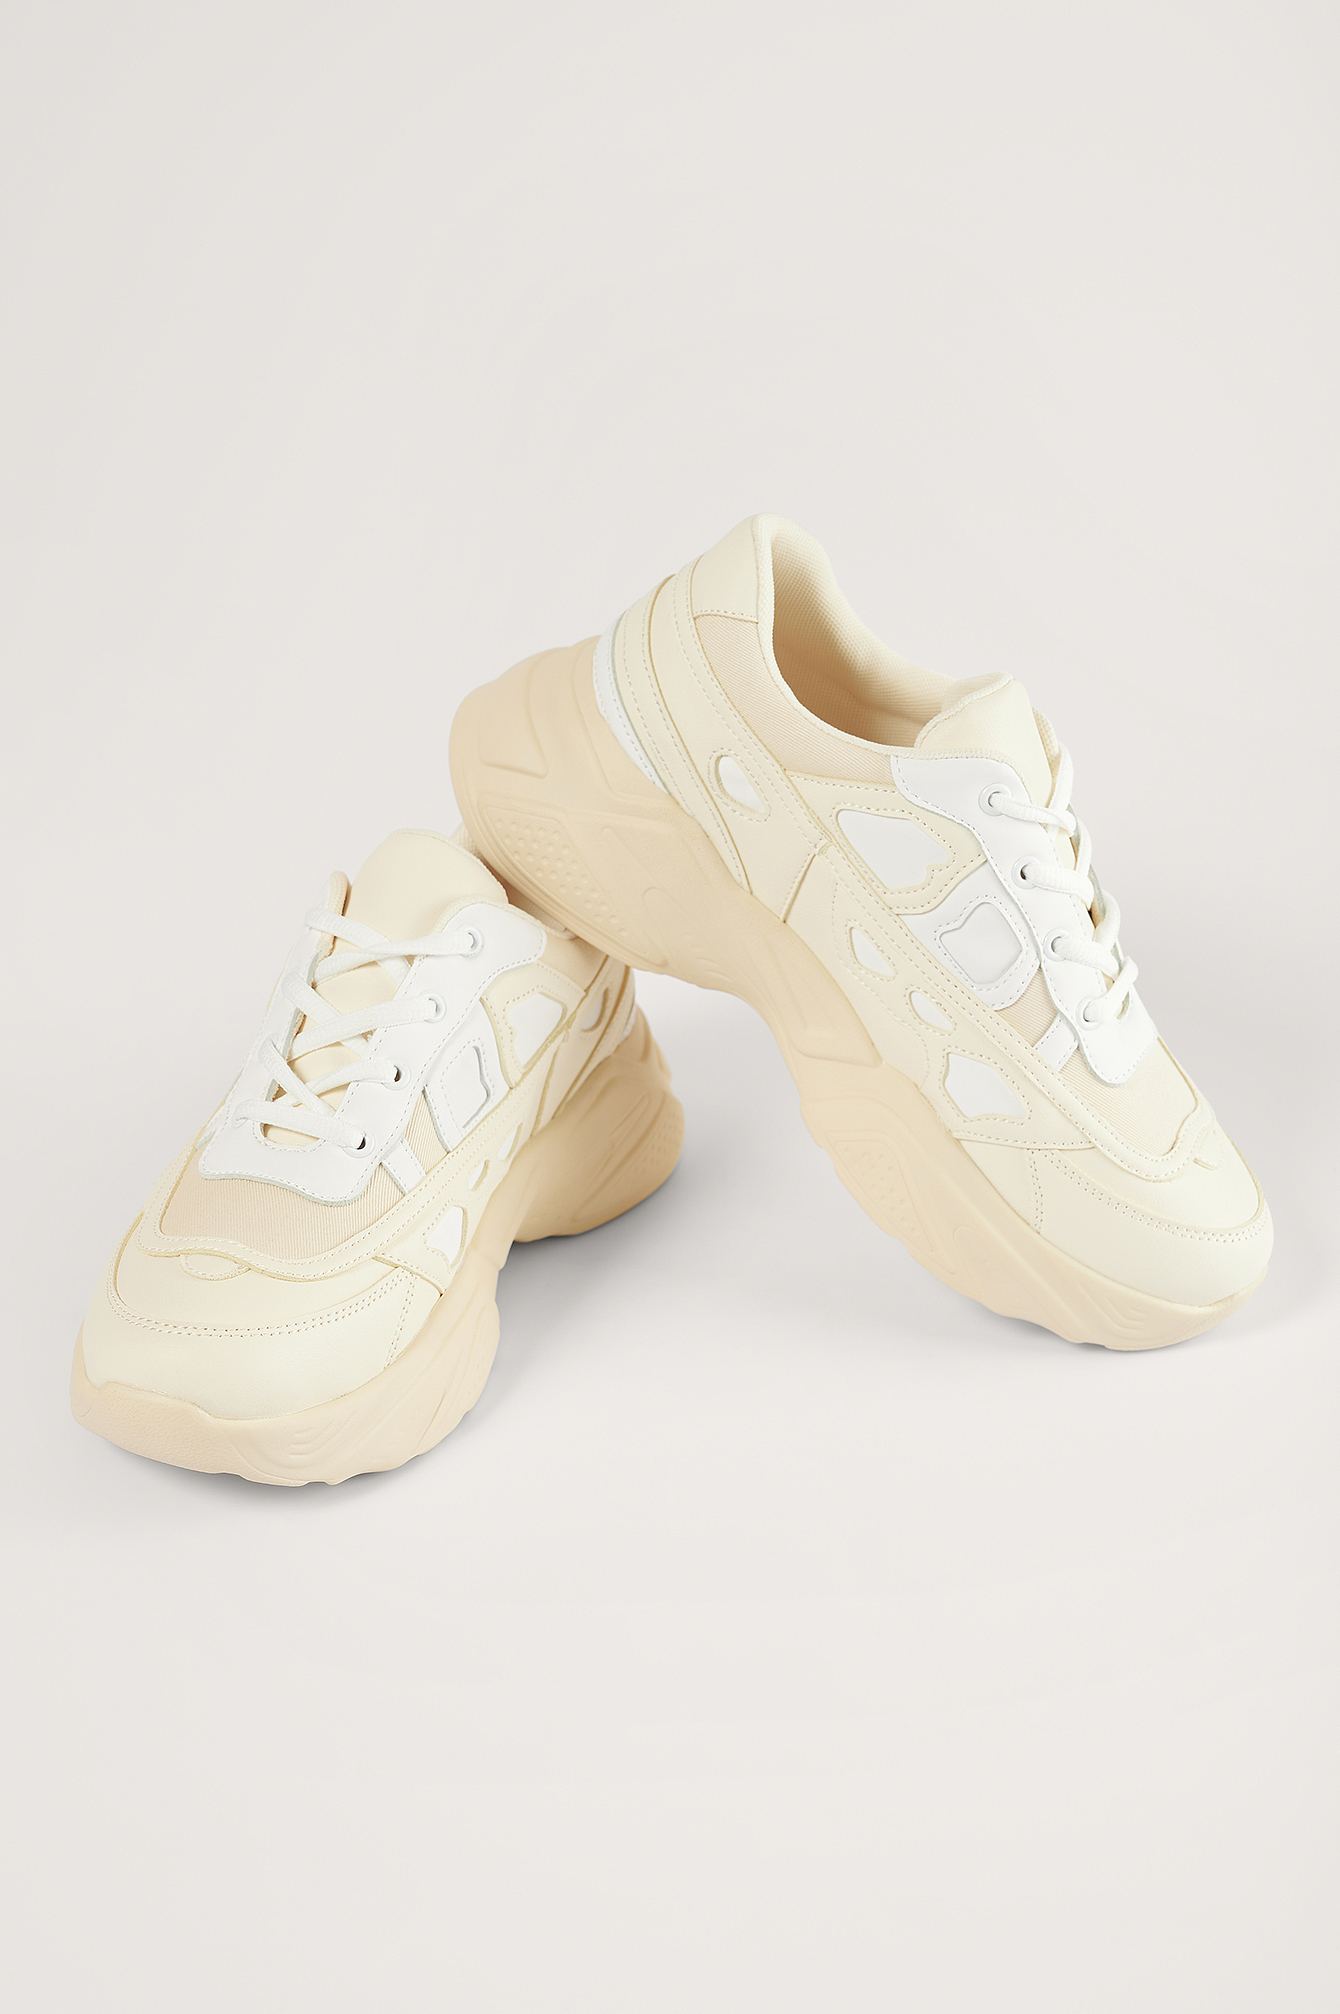 White/Cream Structured Upper Sneakers